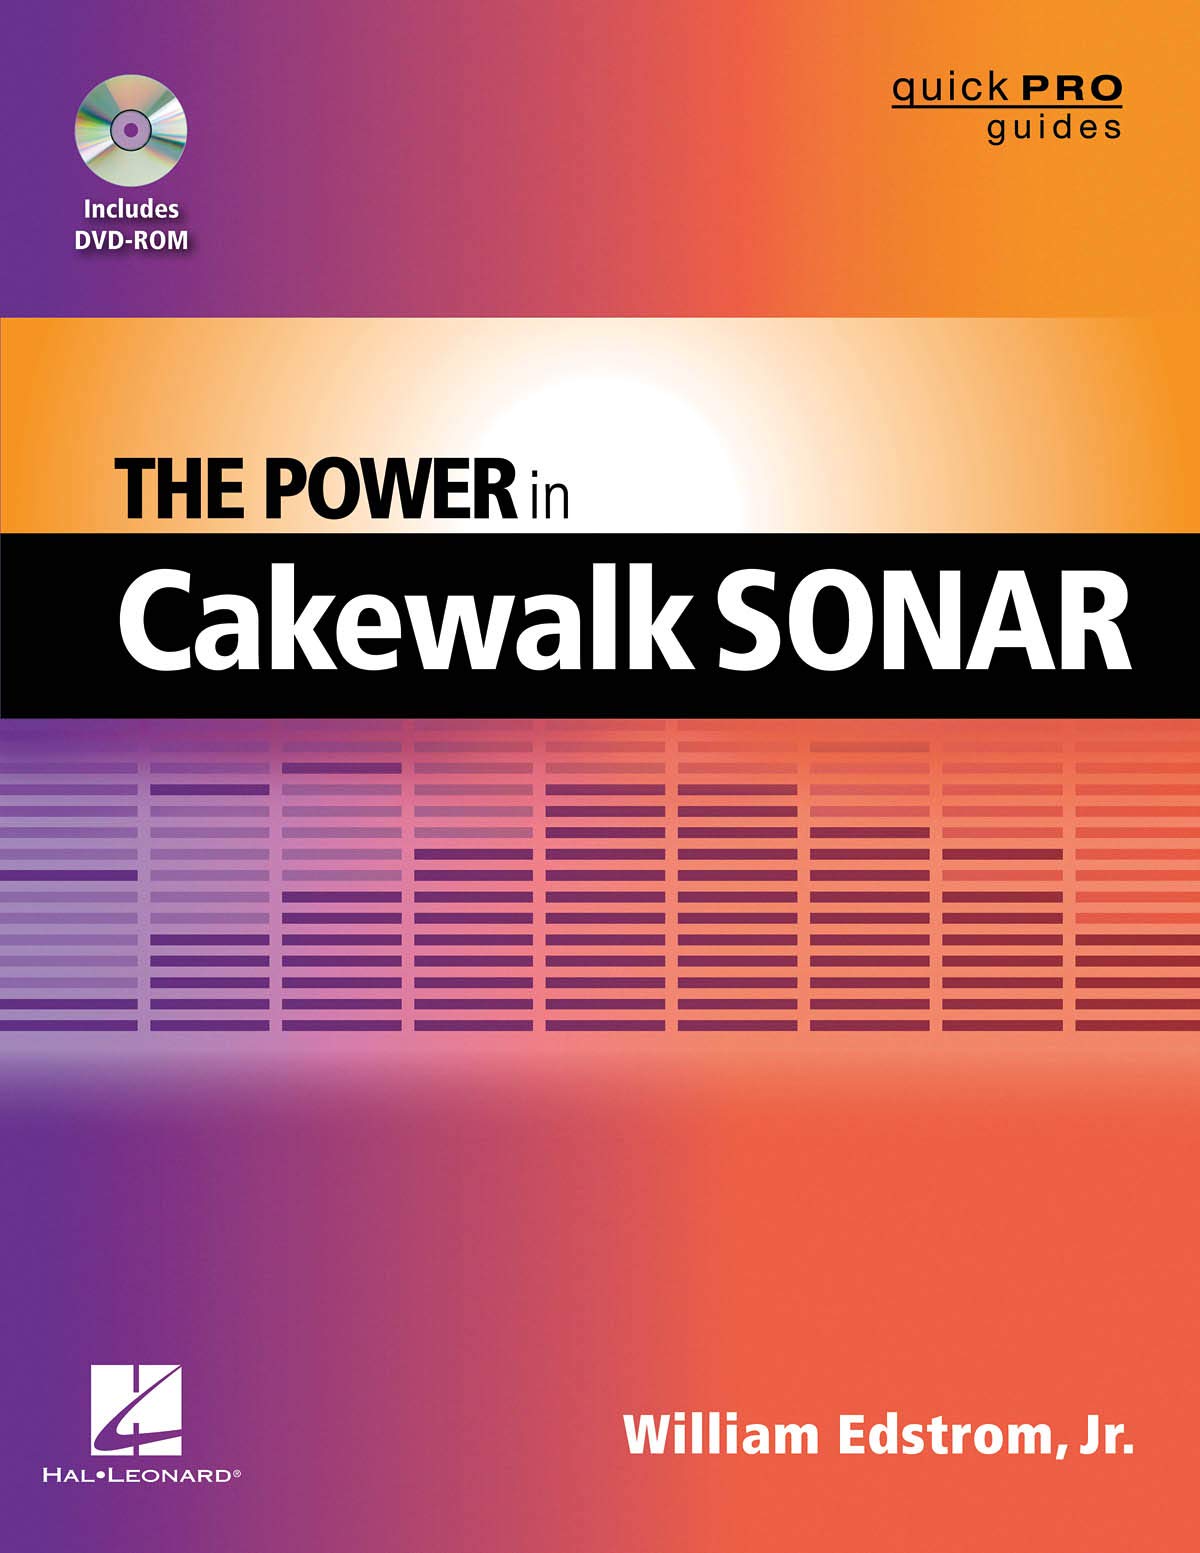 Download Sonar X3 For Mac